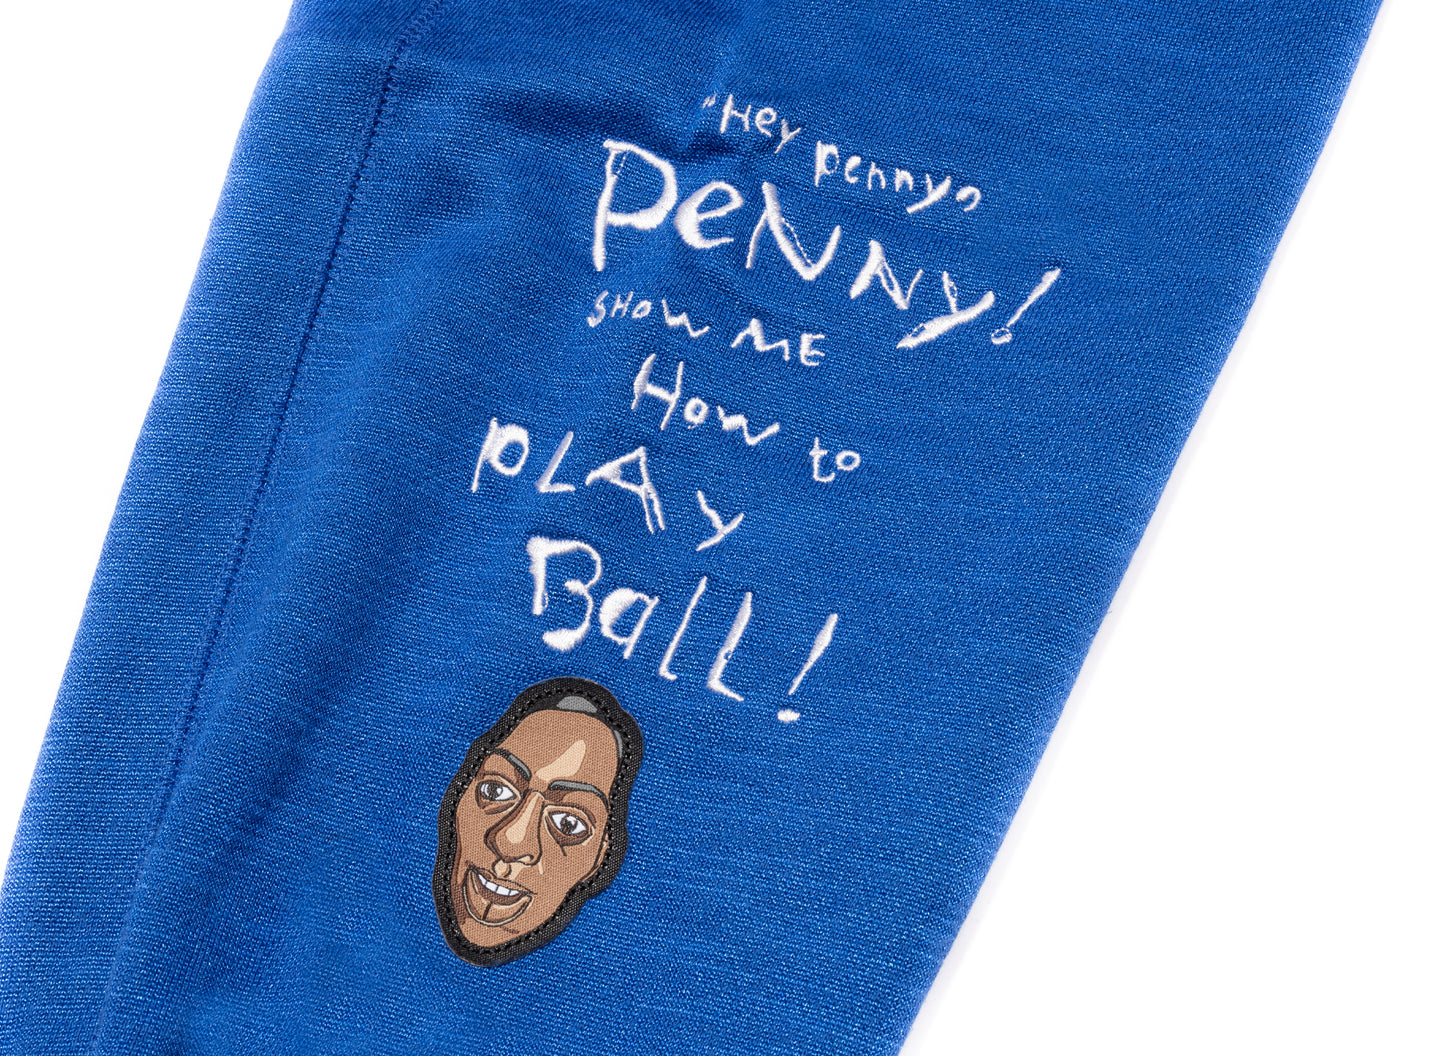 Nike Lil' Penny Premium Dri-Fit Pants